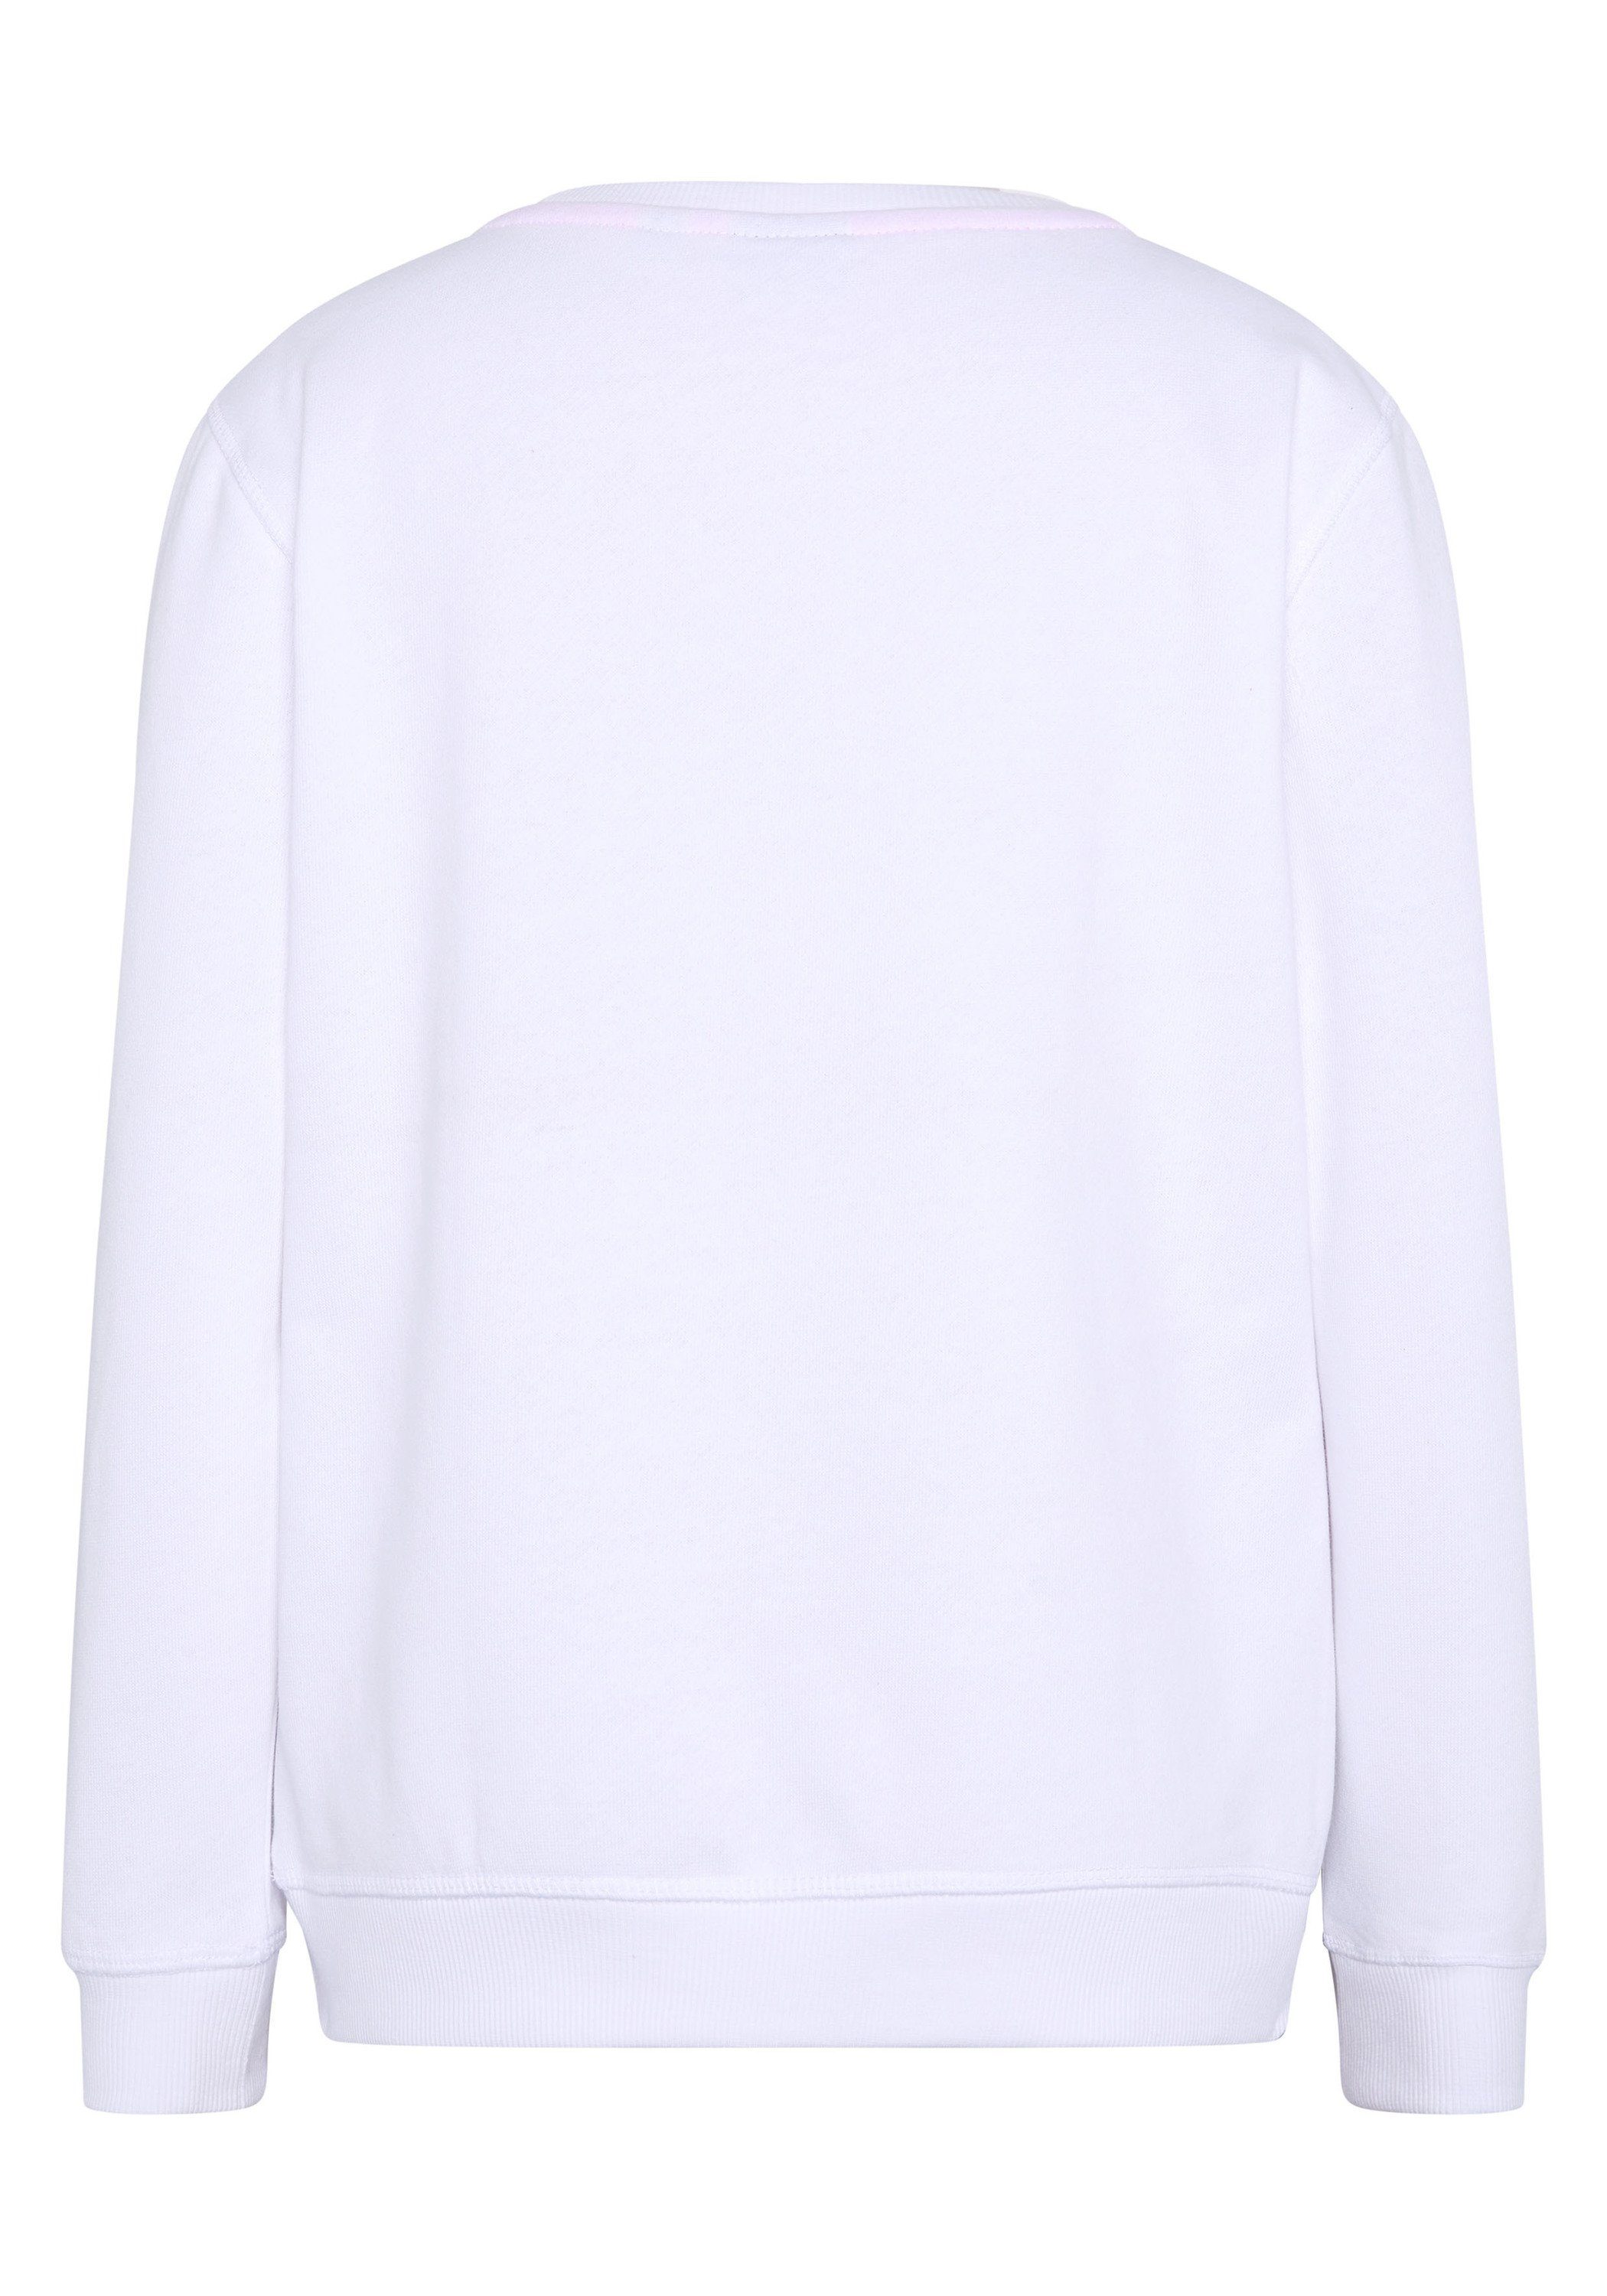 Sylt White Bright mit 11-0601 Sweatshirt Logodesign Polo floralem